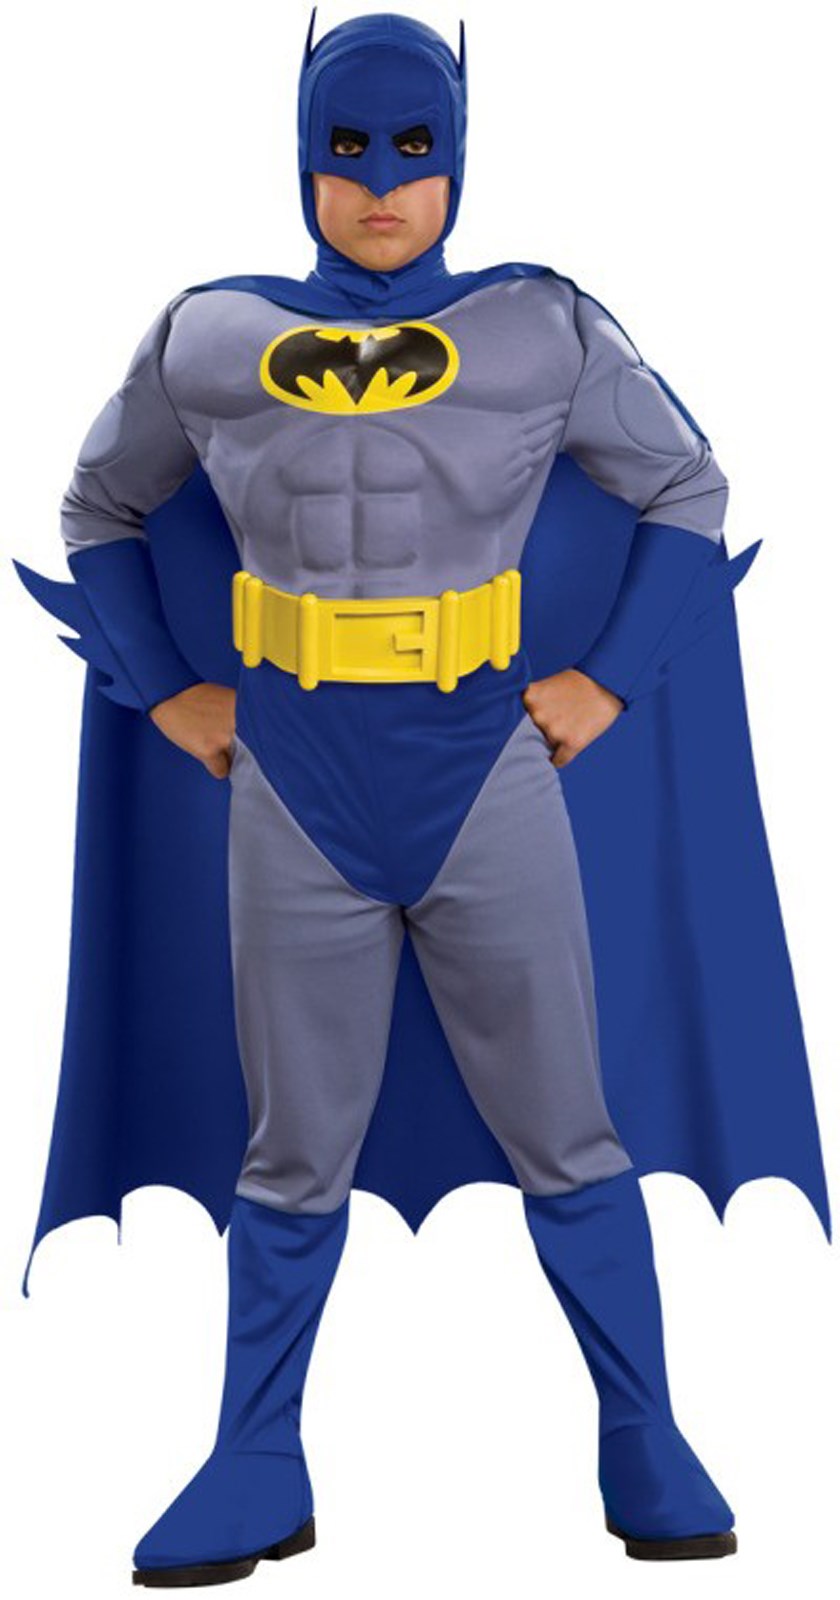 Batman Brave & Bold Deluxe M/C Batman Toddler/Child Costume